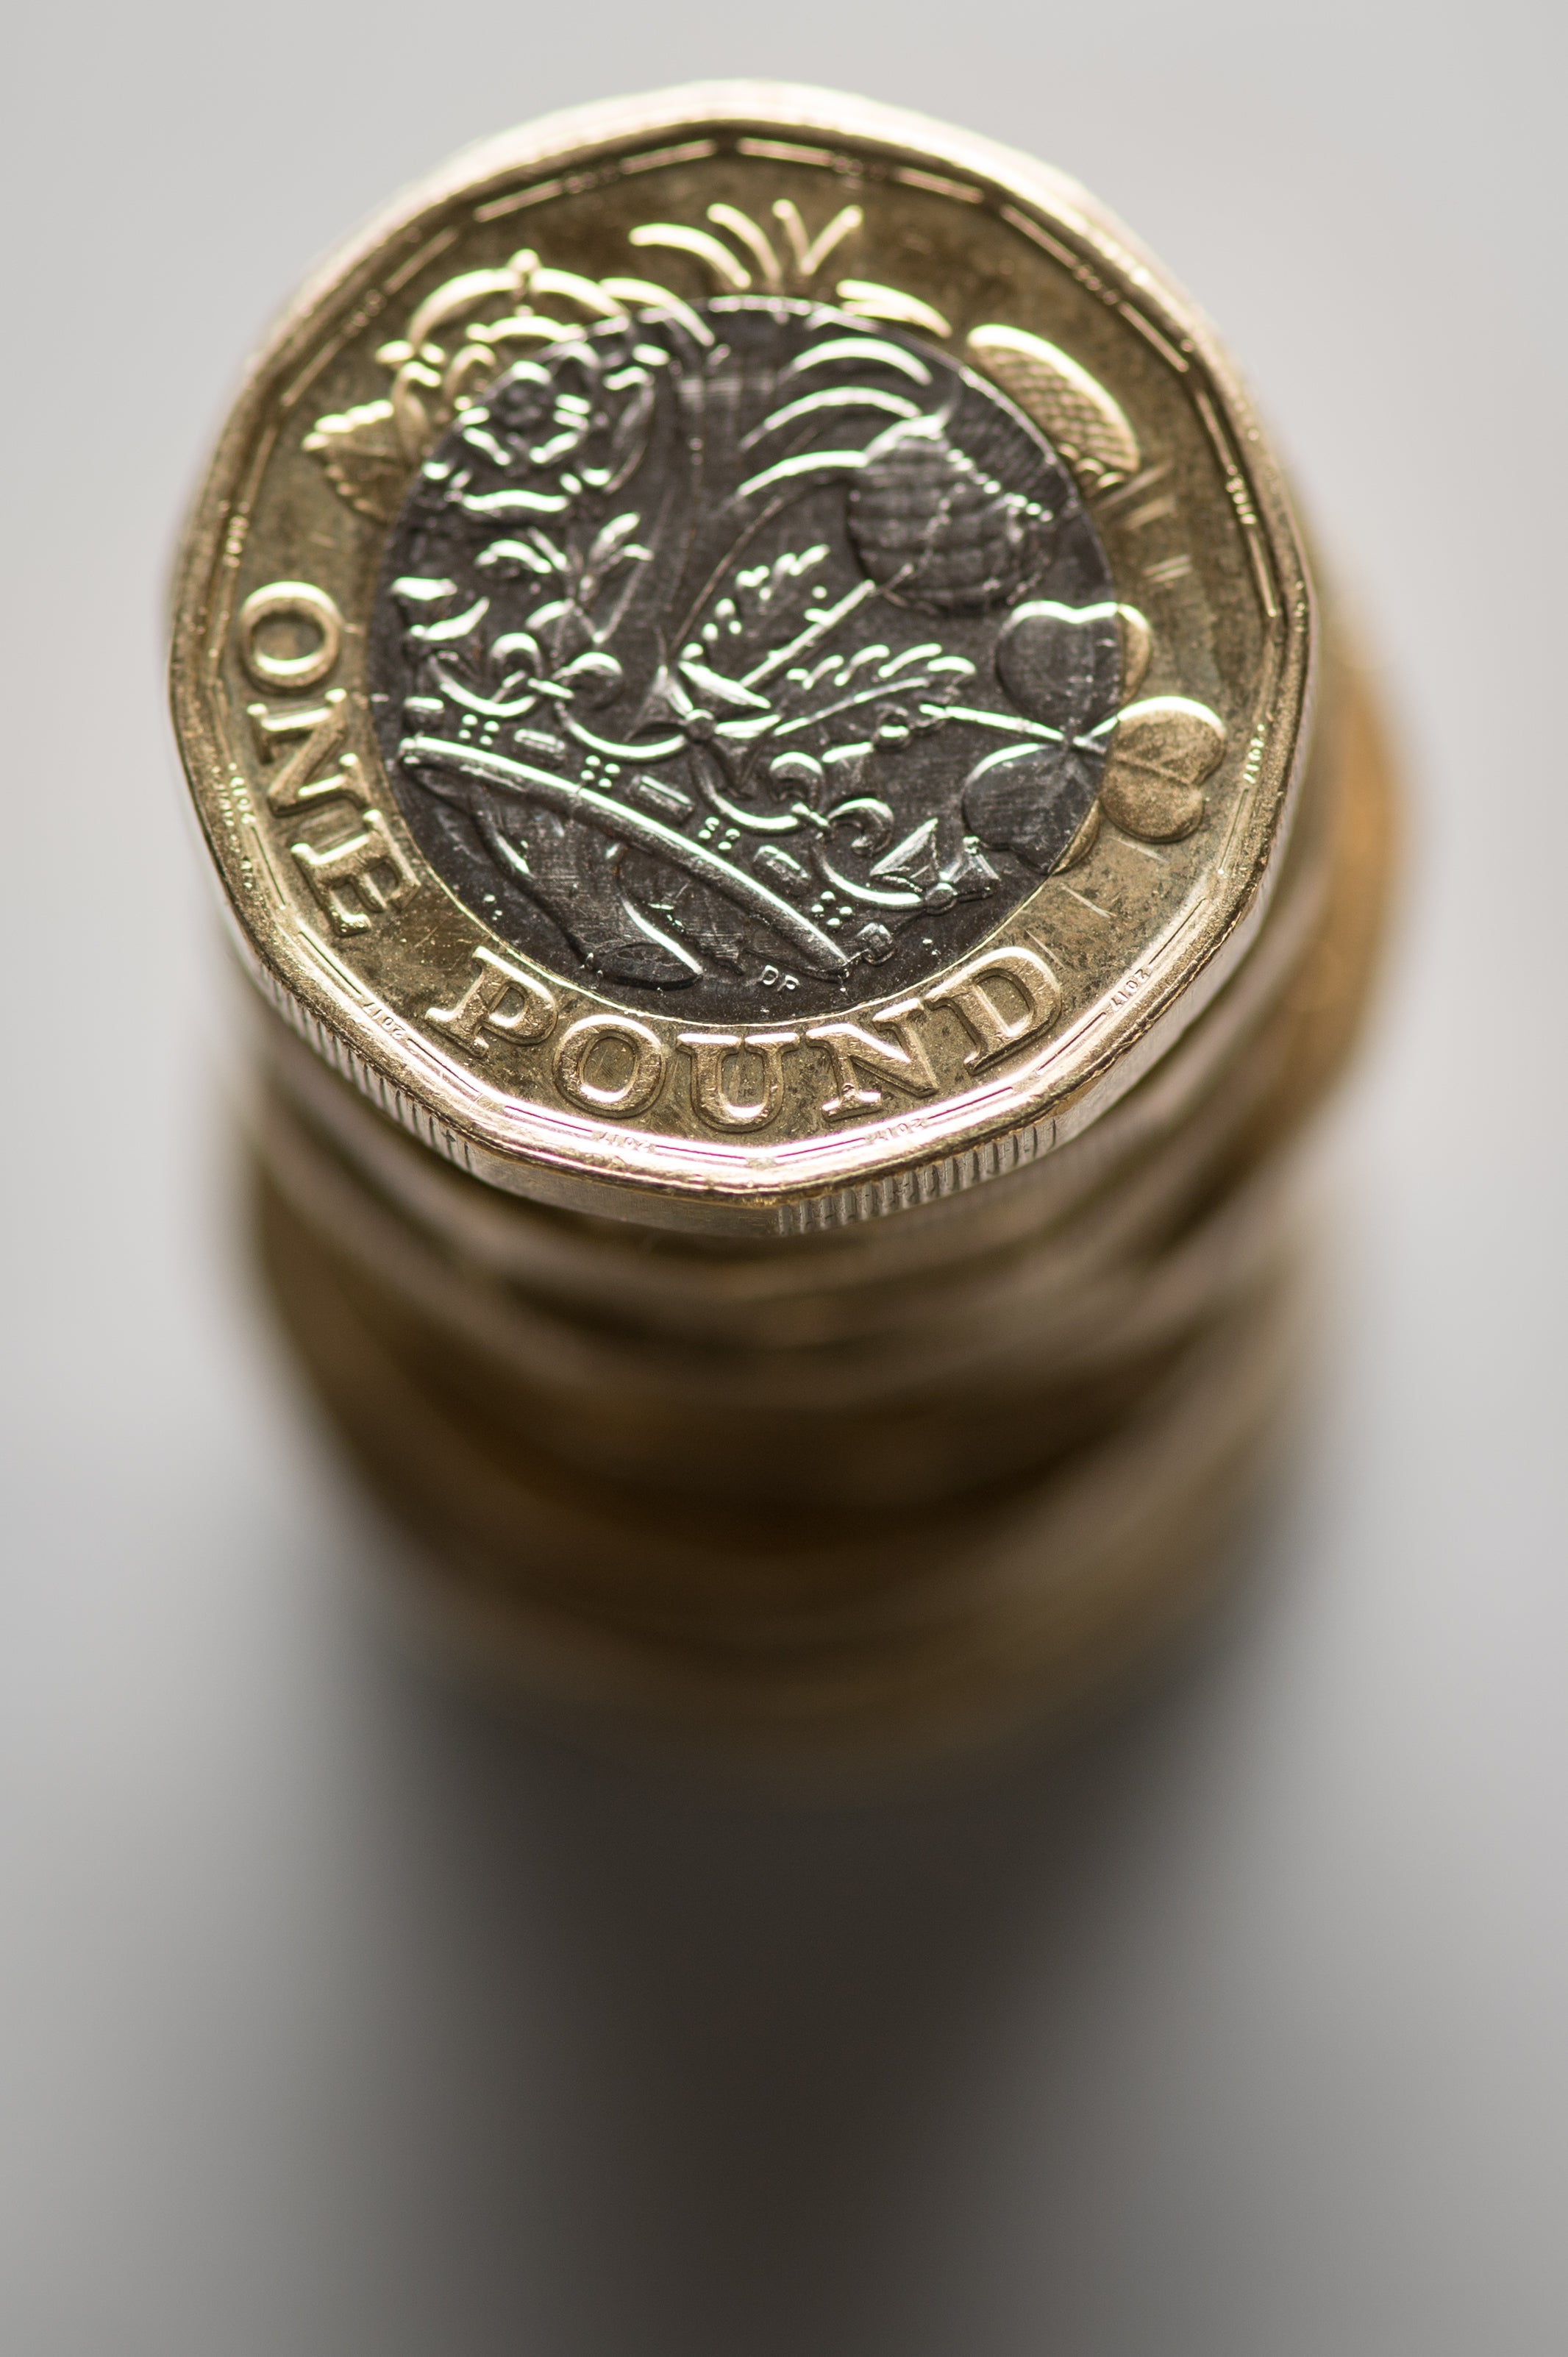 Artist Michael Armitage will create a new design for £1 coins (Dominic Lipinski/PA)